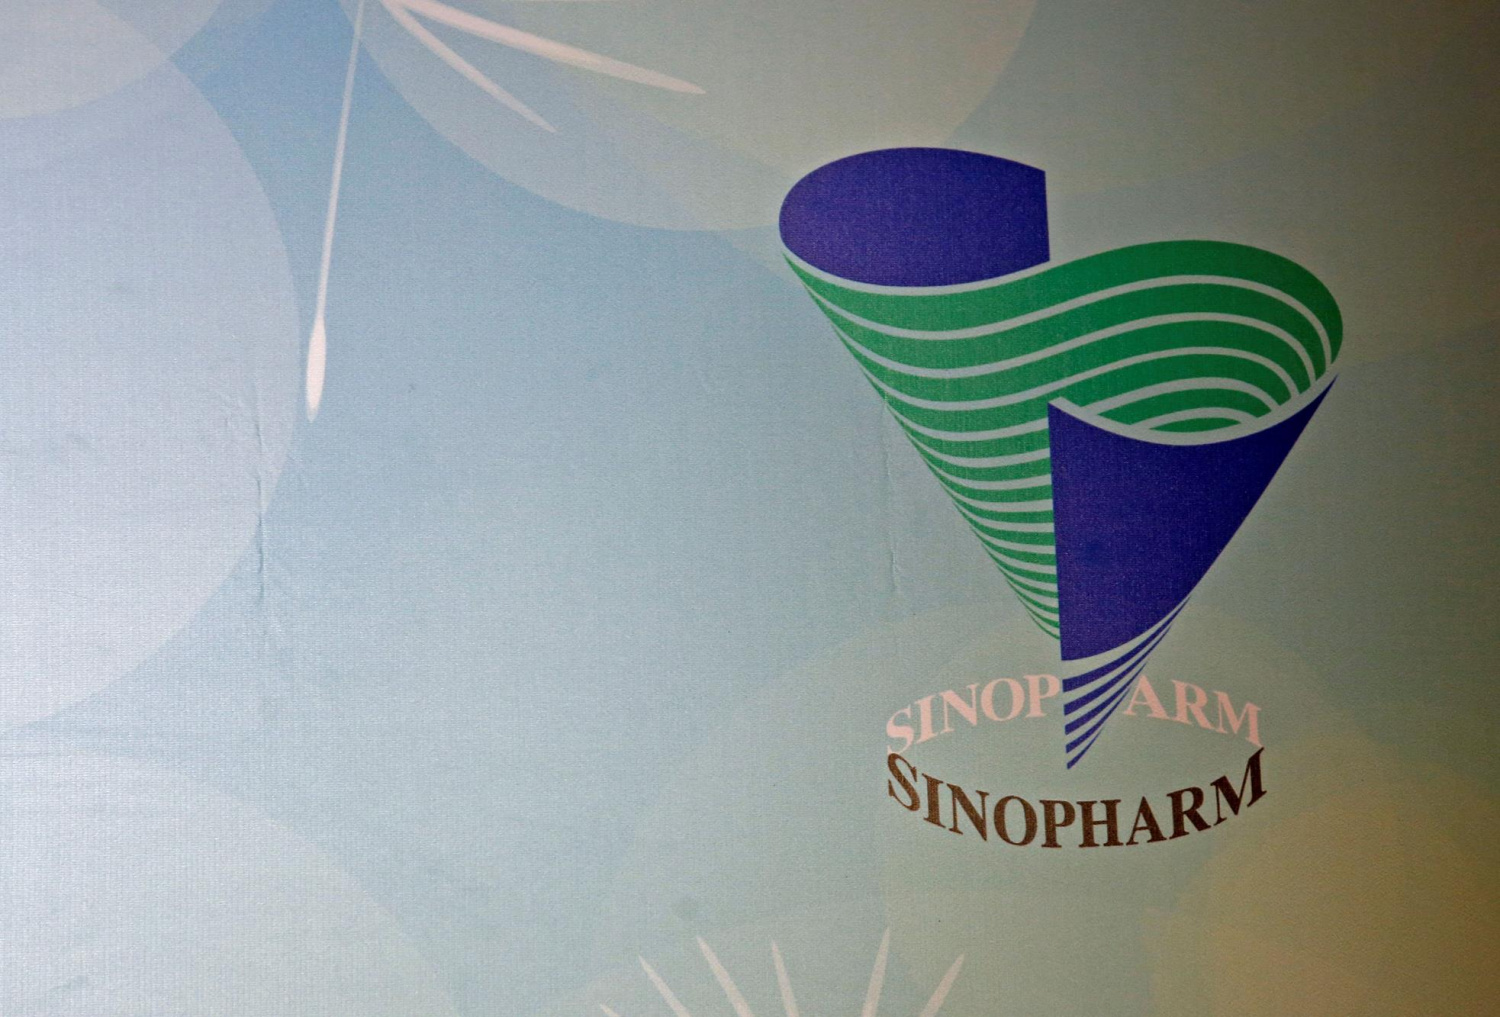 Chinas Sinopharm Starts Phase 3 COVID19 Vaccine Test In UAE